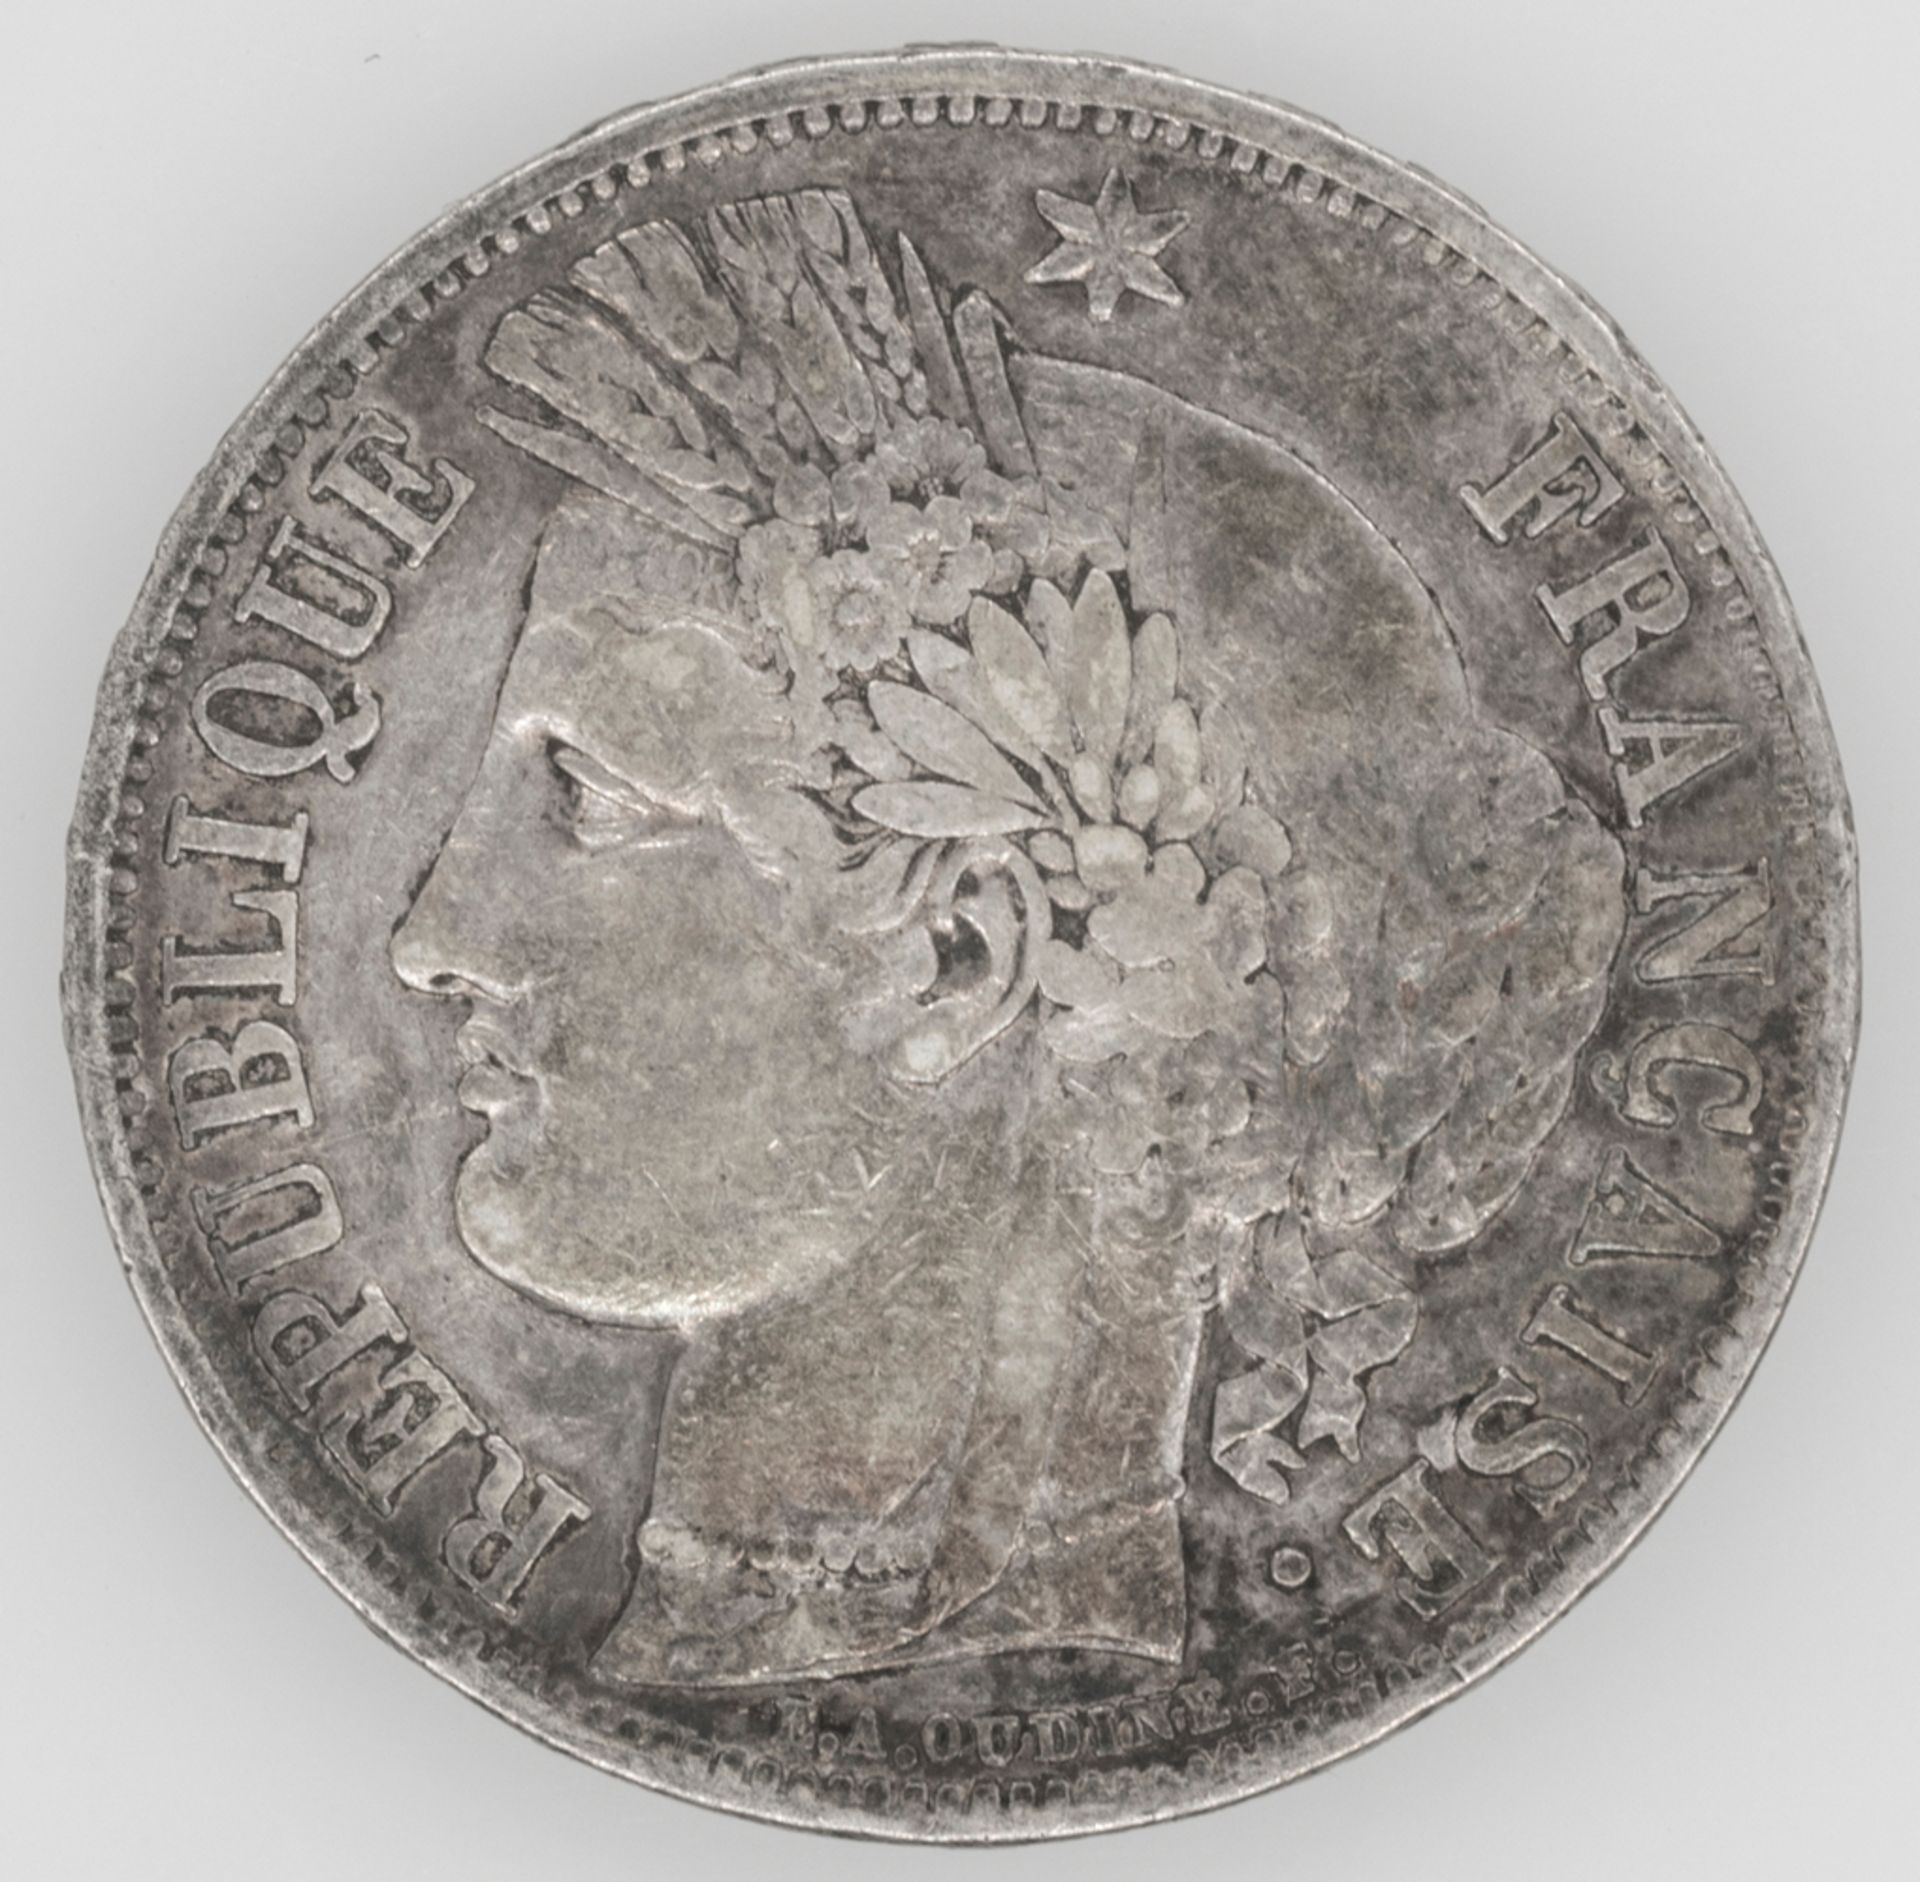 Frankreich 1849 A, 5.- Francs - Silbermünze, Prägeanstalt Paris. Erhaltung: ss. - Bild 2 aus 2